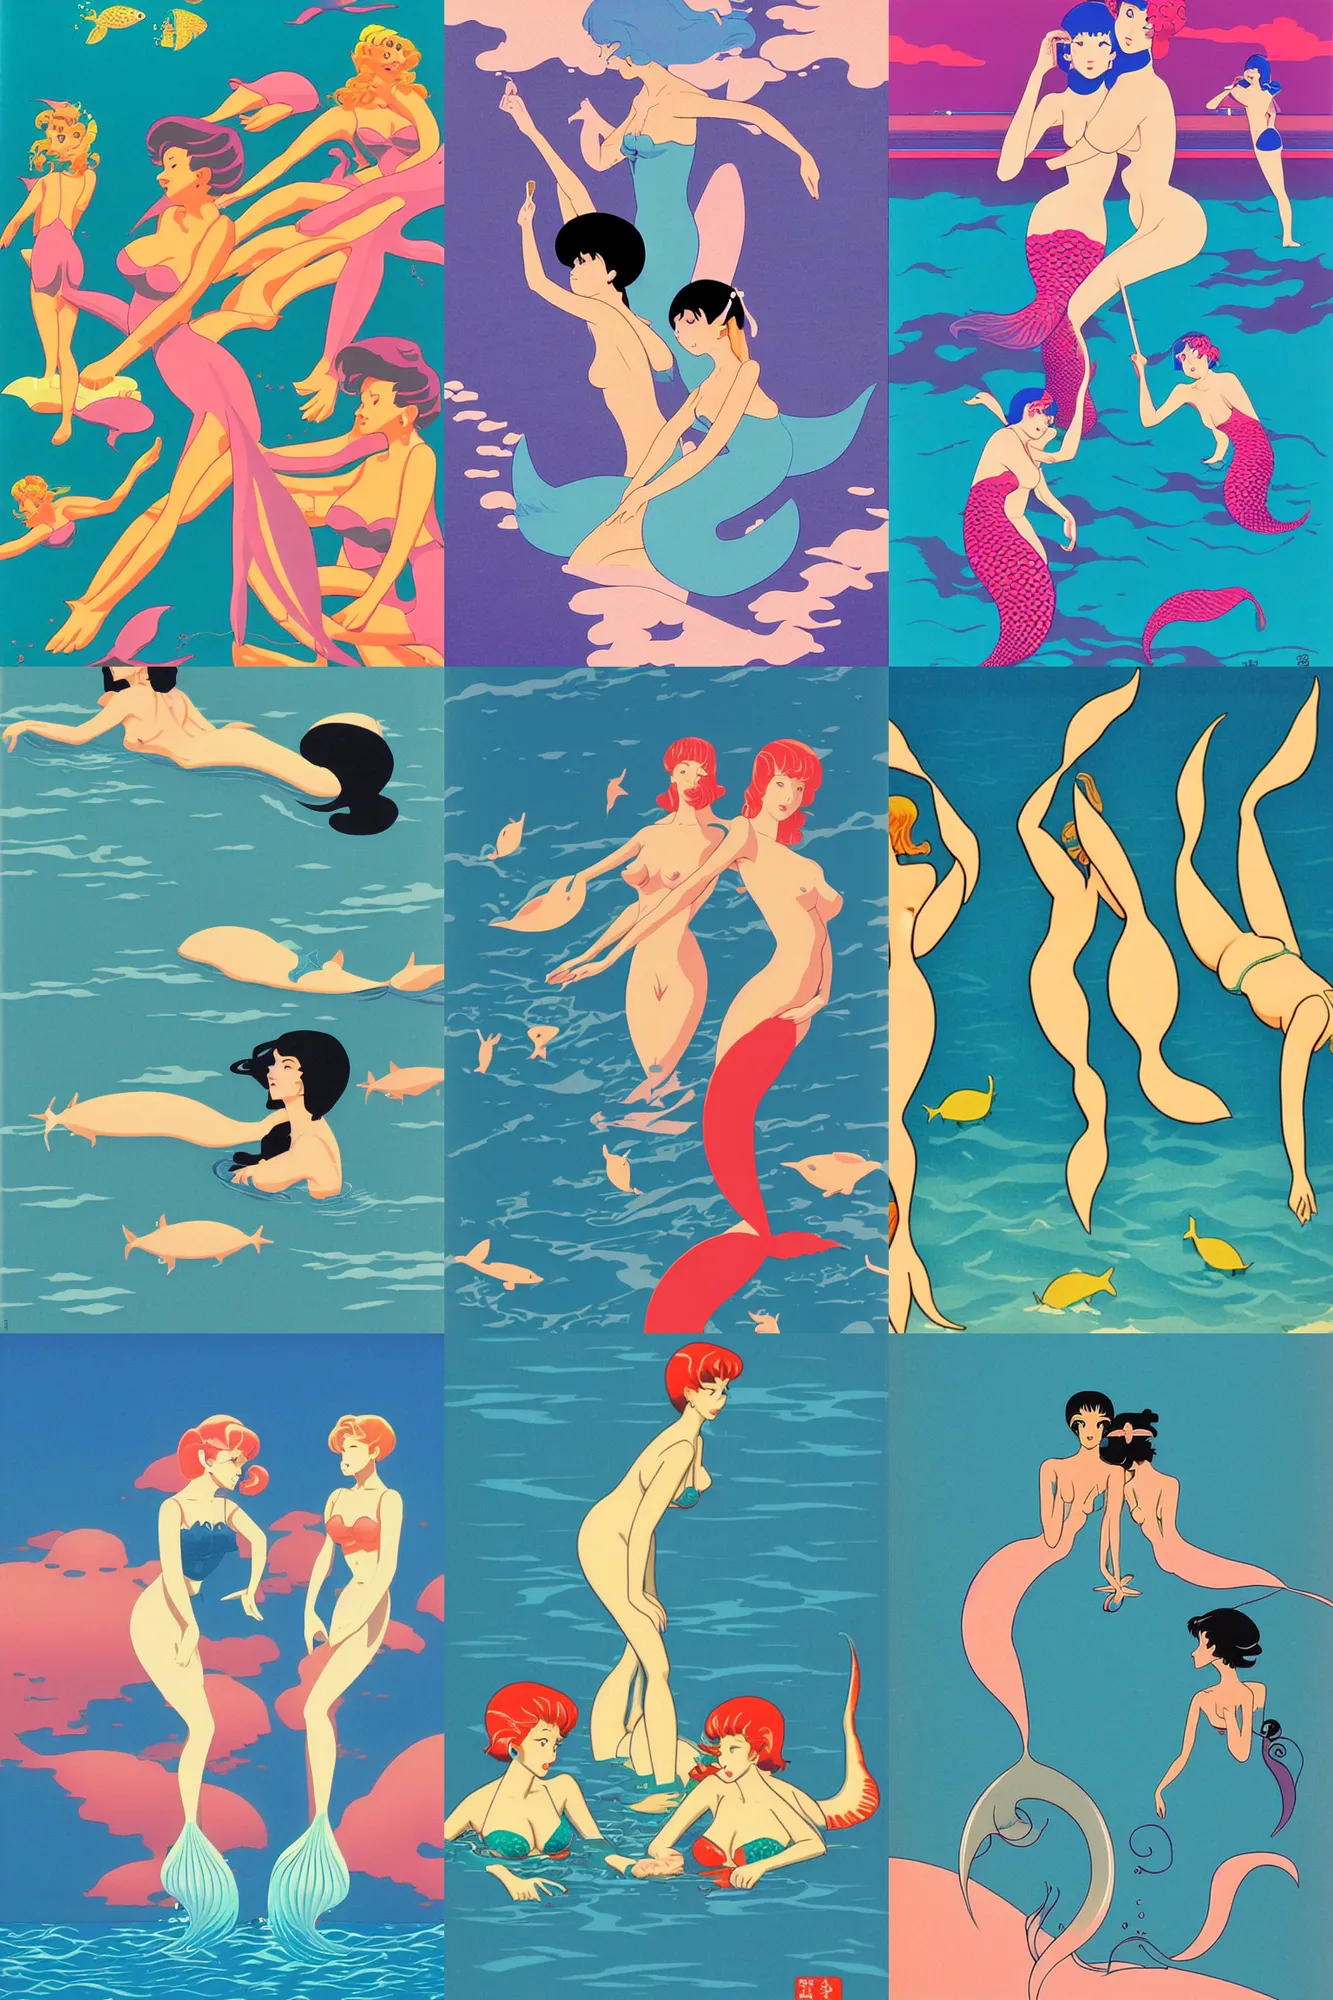 Prompt: Mermaids by Hiroshi Nagai